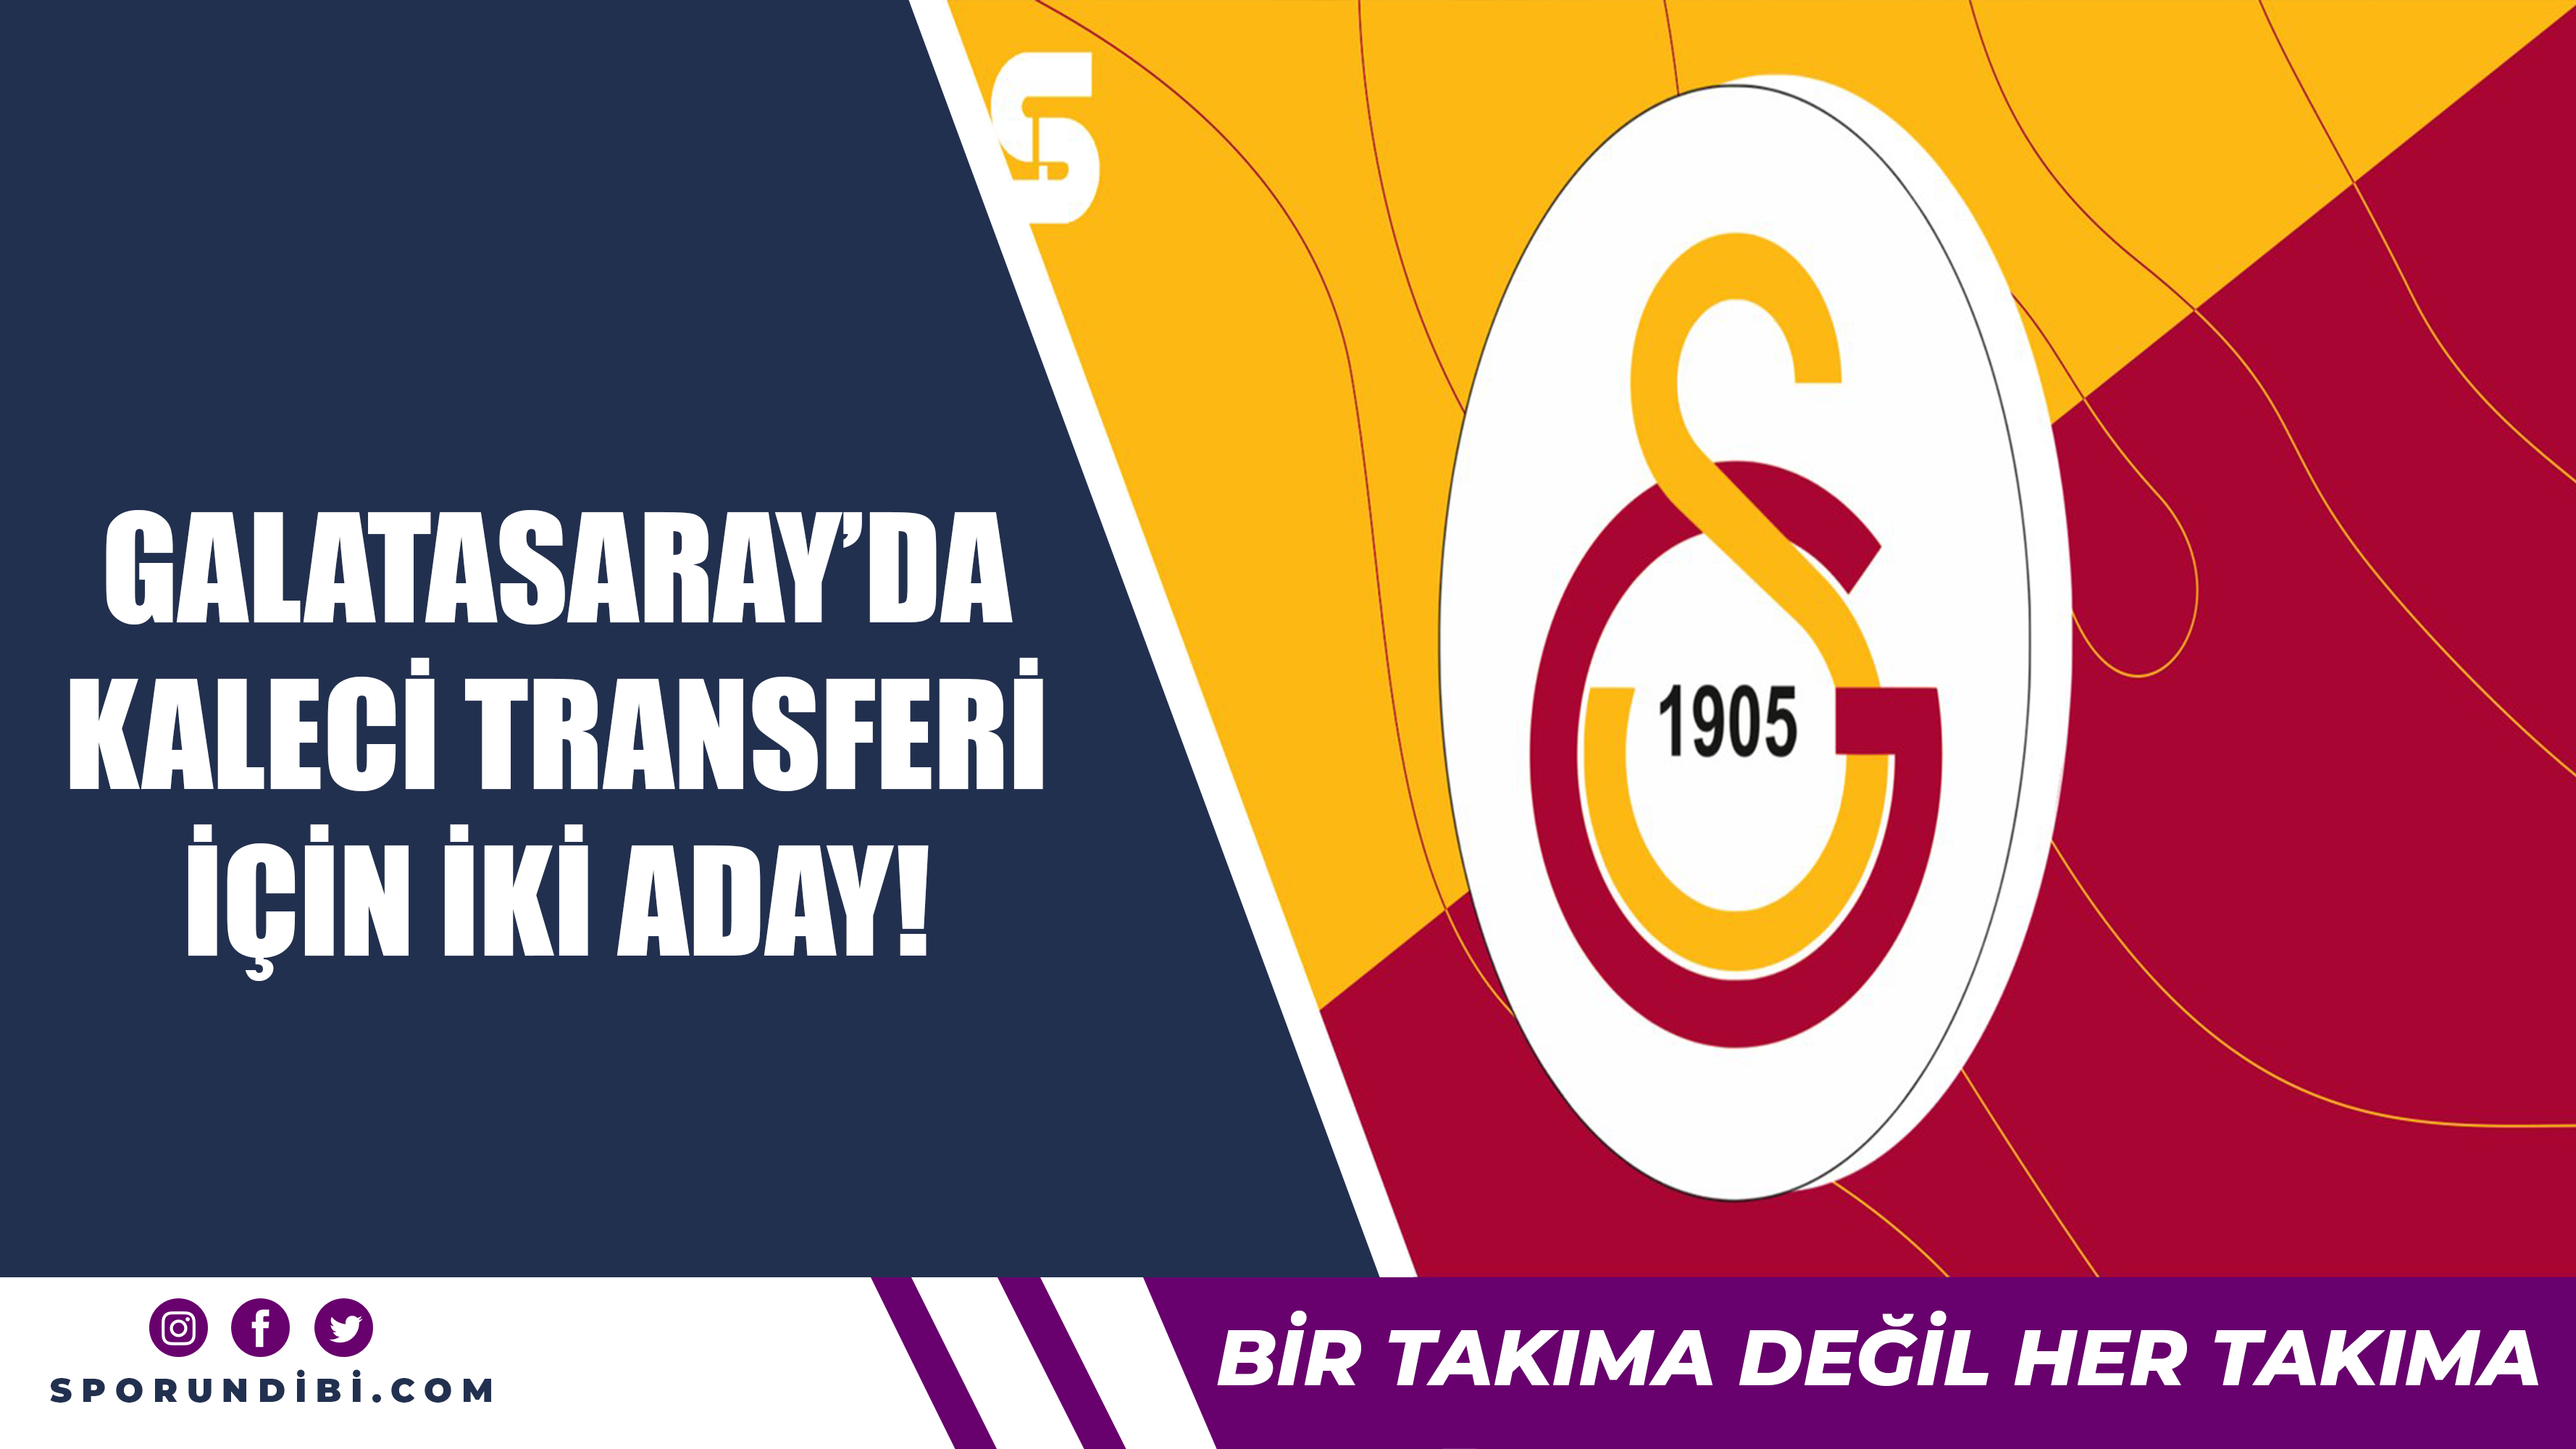 Galatasaray'da kaleci transferi için iki aday!